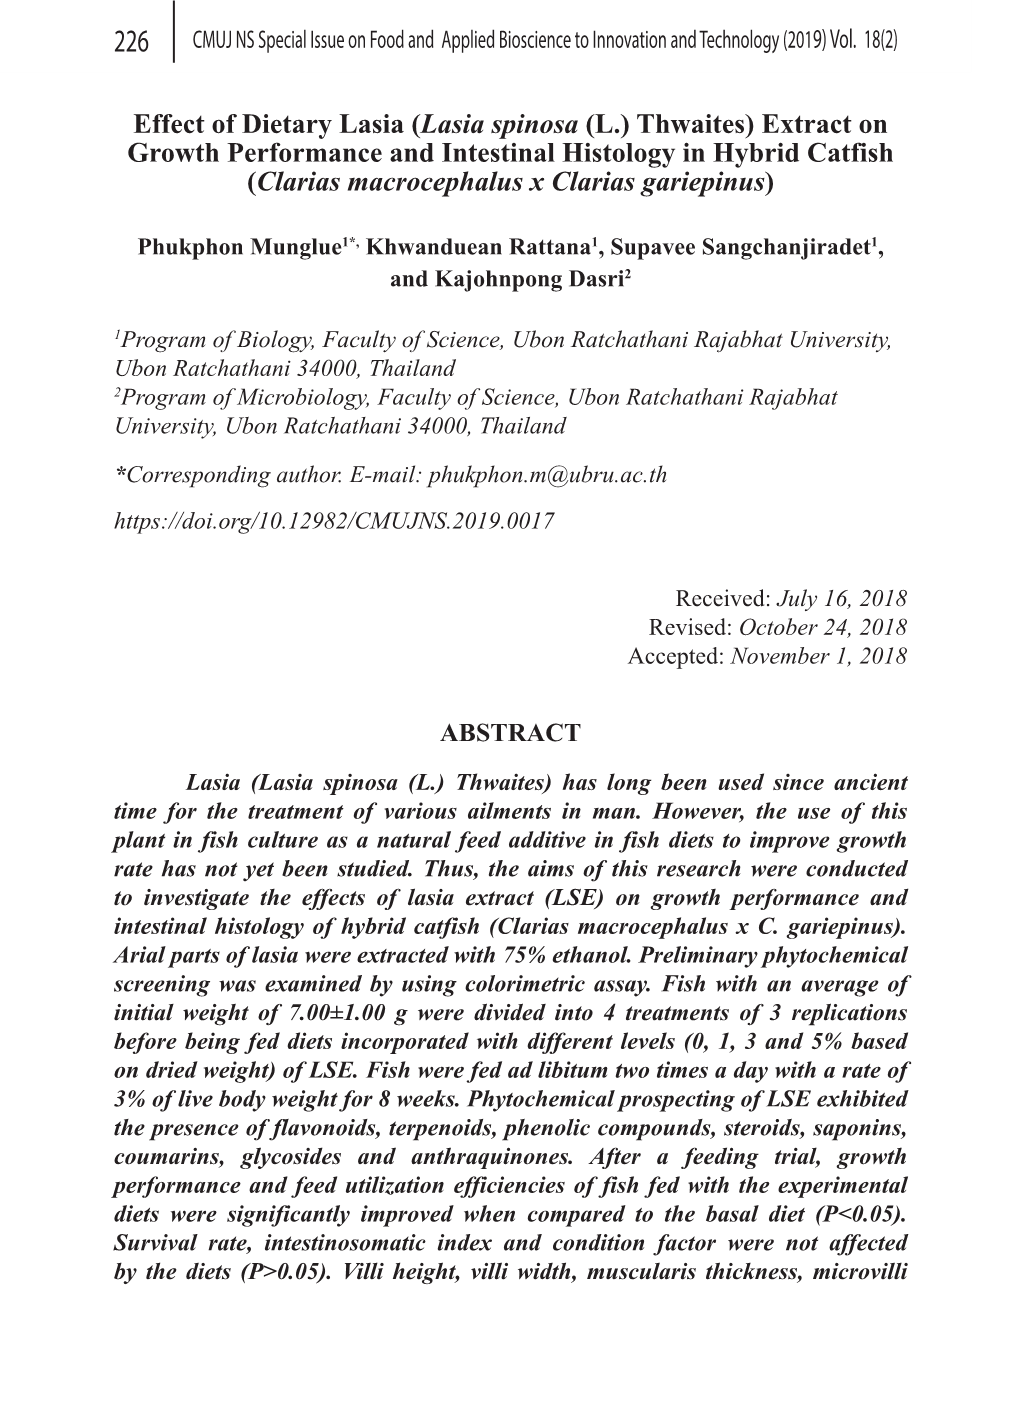 Lasia Spinosa (L.) Thwaites) Extract on Growth Performance and Intestinal Histology in Hybrid Catfish (Clarias Macrocephalus X Clarias Gariepinus